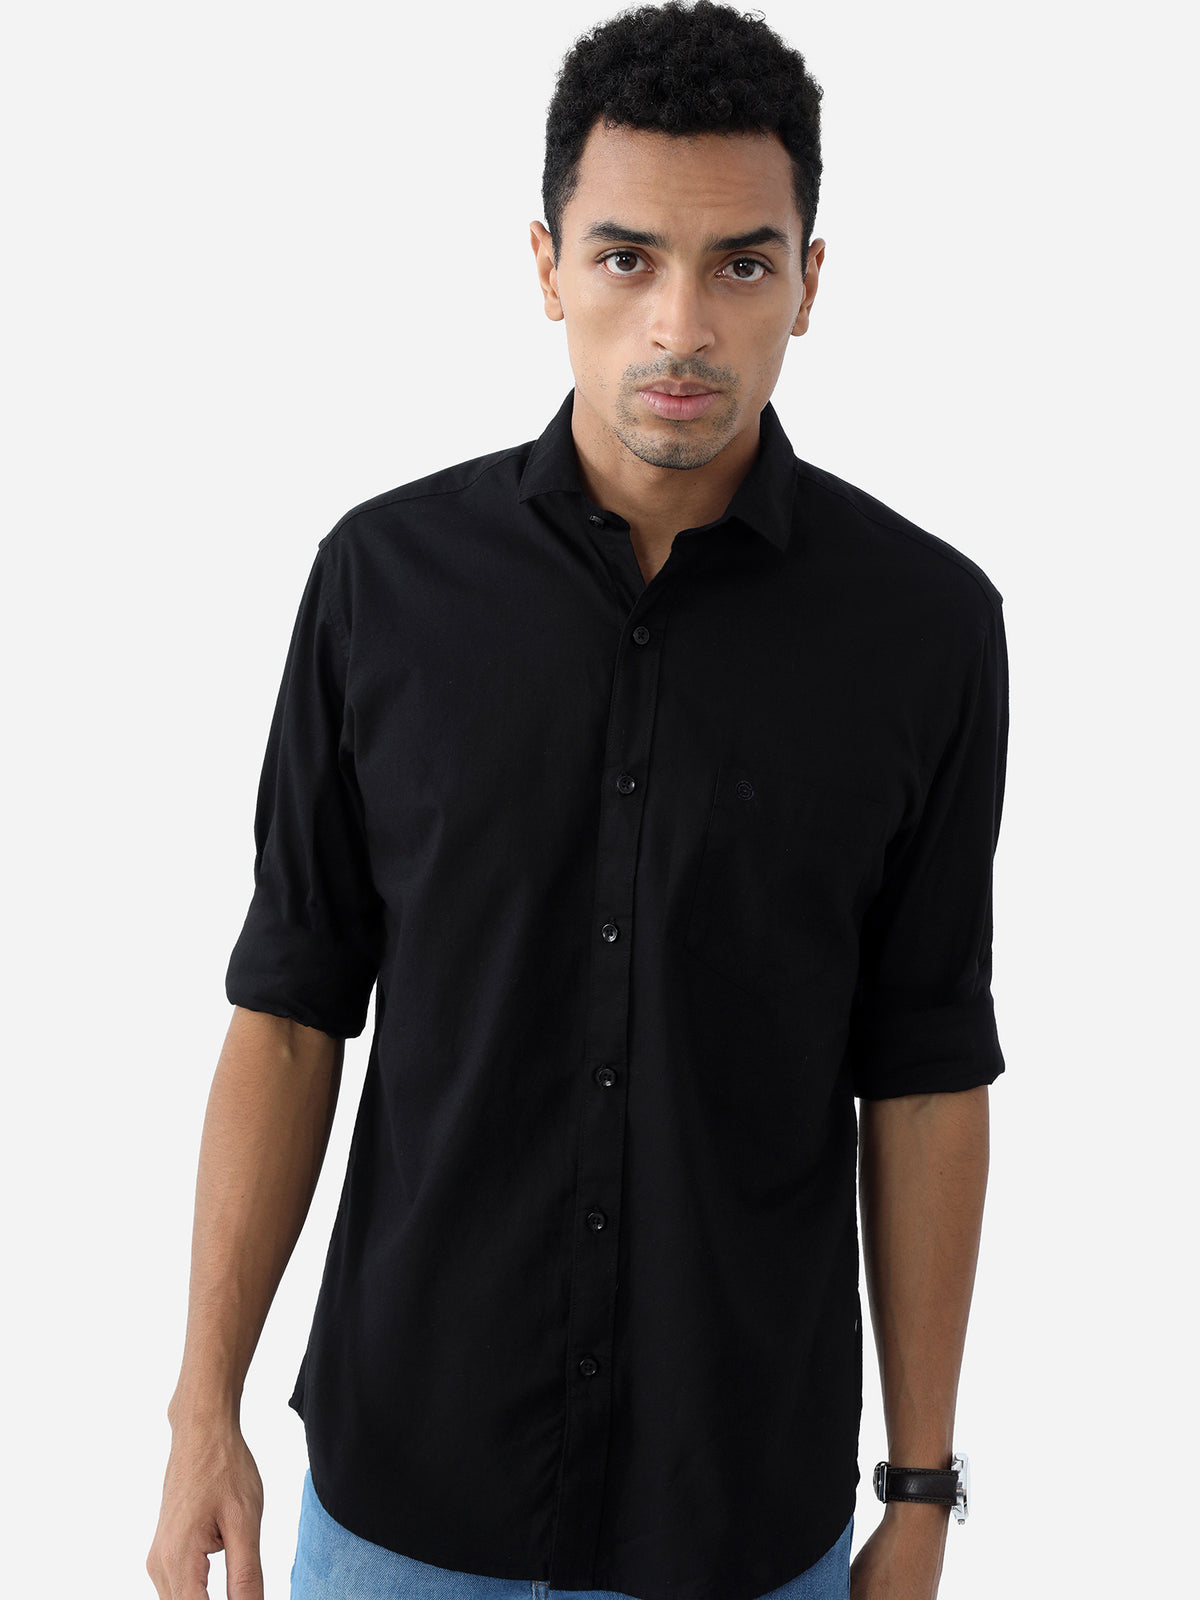 Black Solid Cotton Full Sleeve Shirt